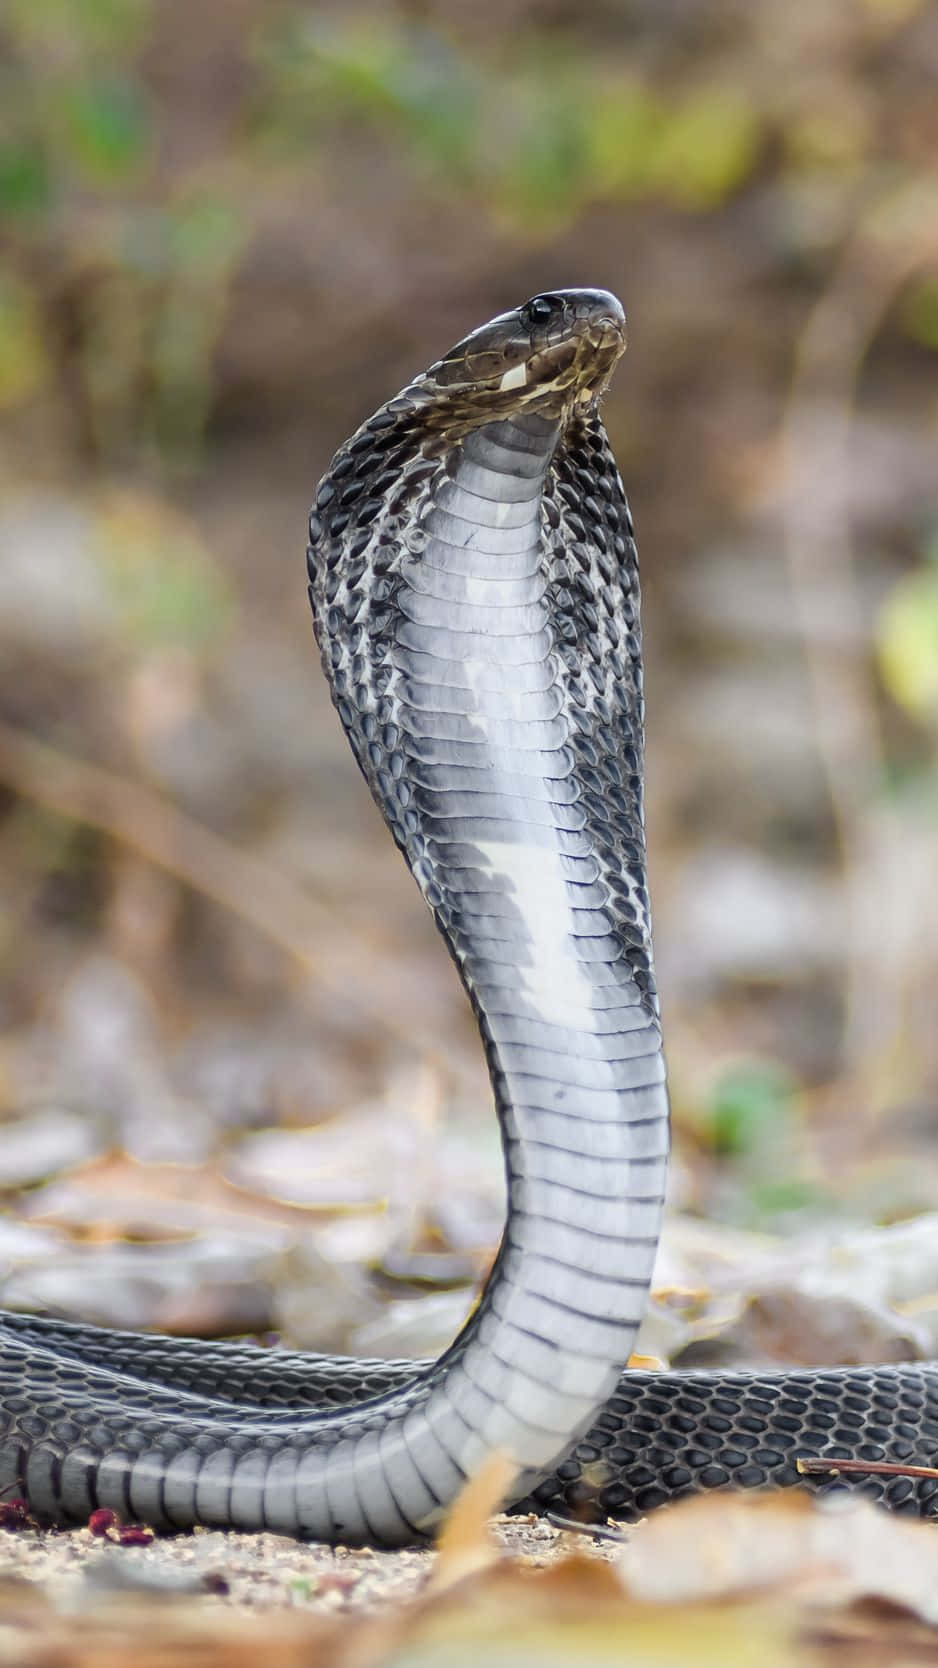 Close up of an alert King Cobra snake